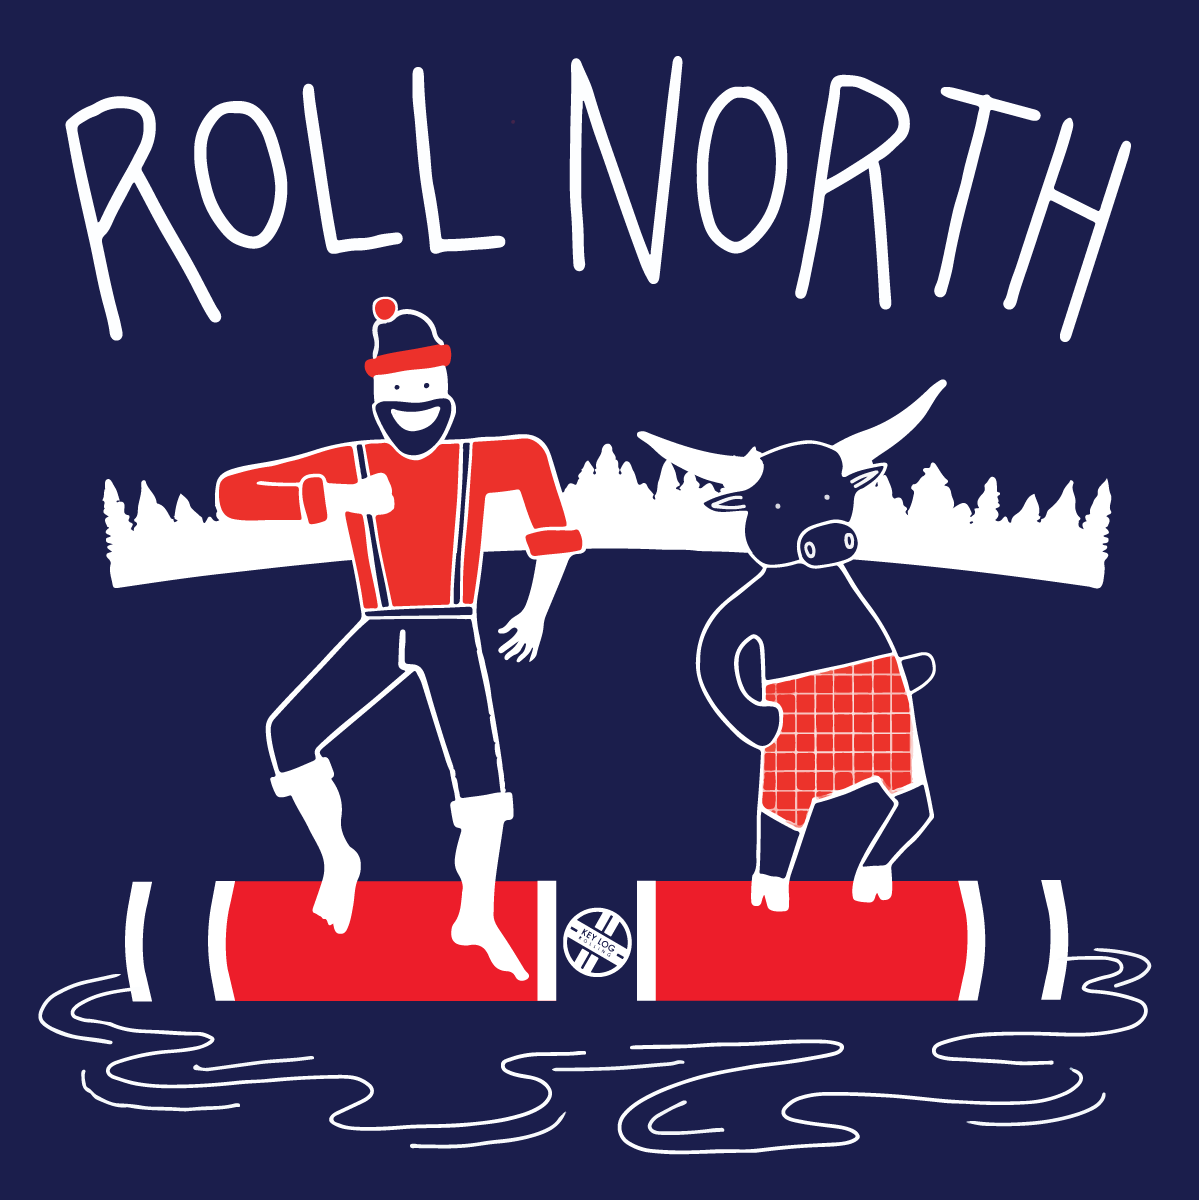 Roll North Tee - Key Log Rolling